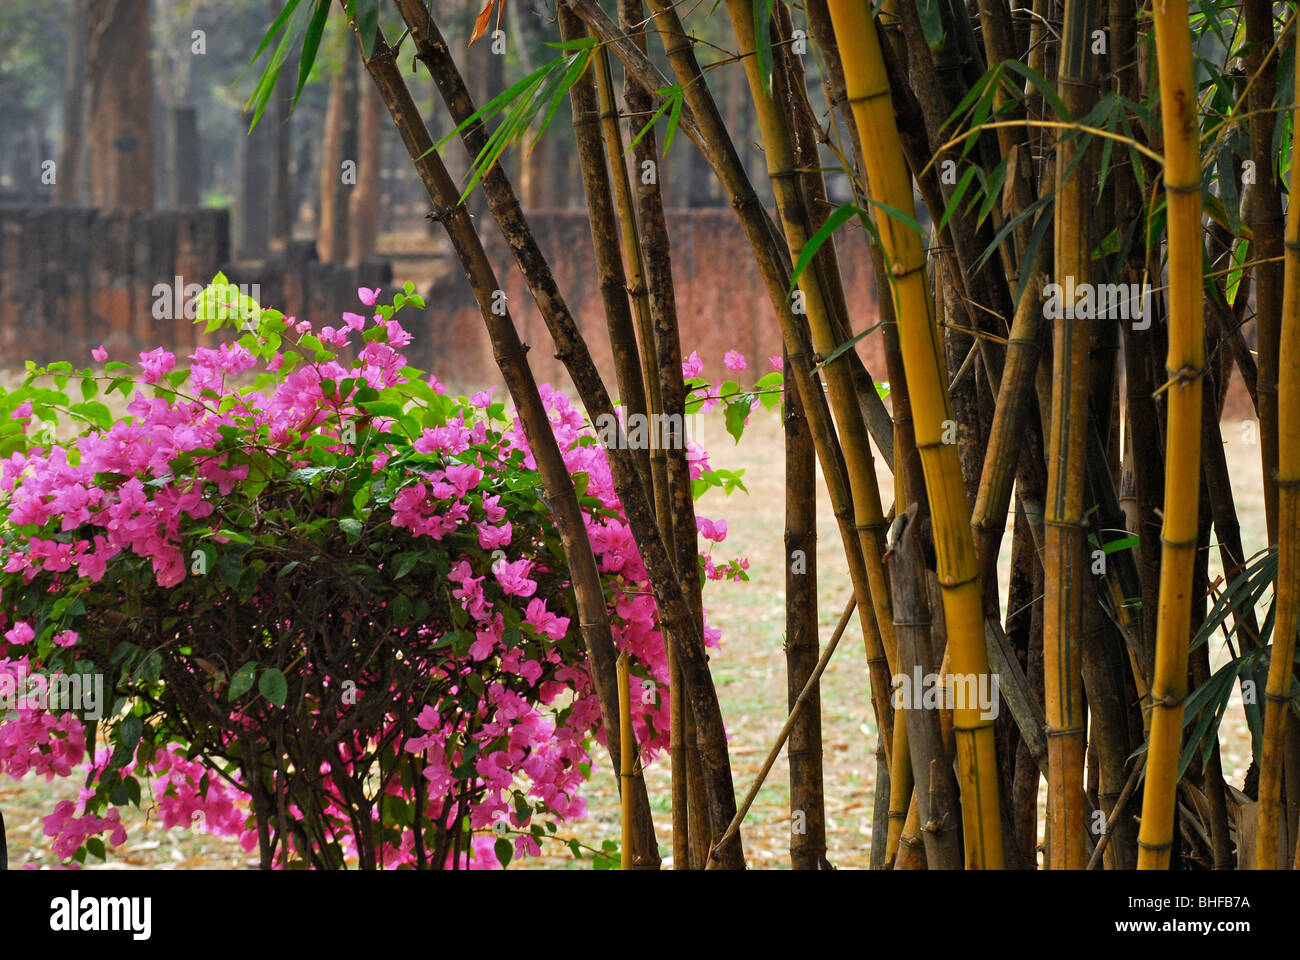 Bambou, Kamphaeng Phet, Aranyik, bambou, Thailande, Asie Banque D'Images